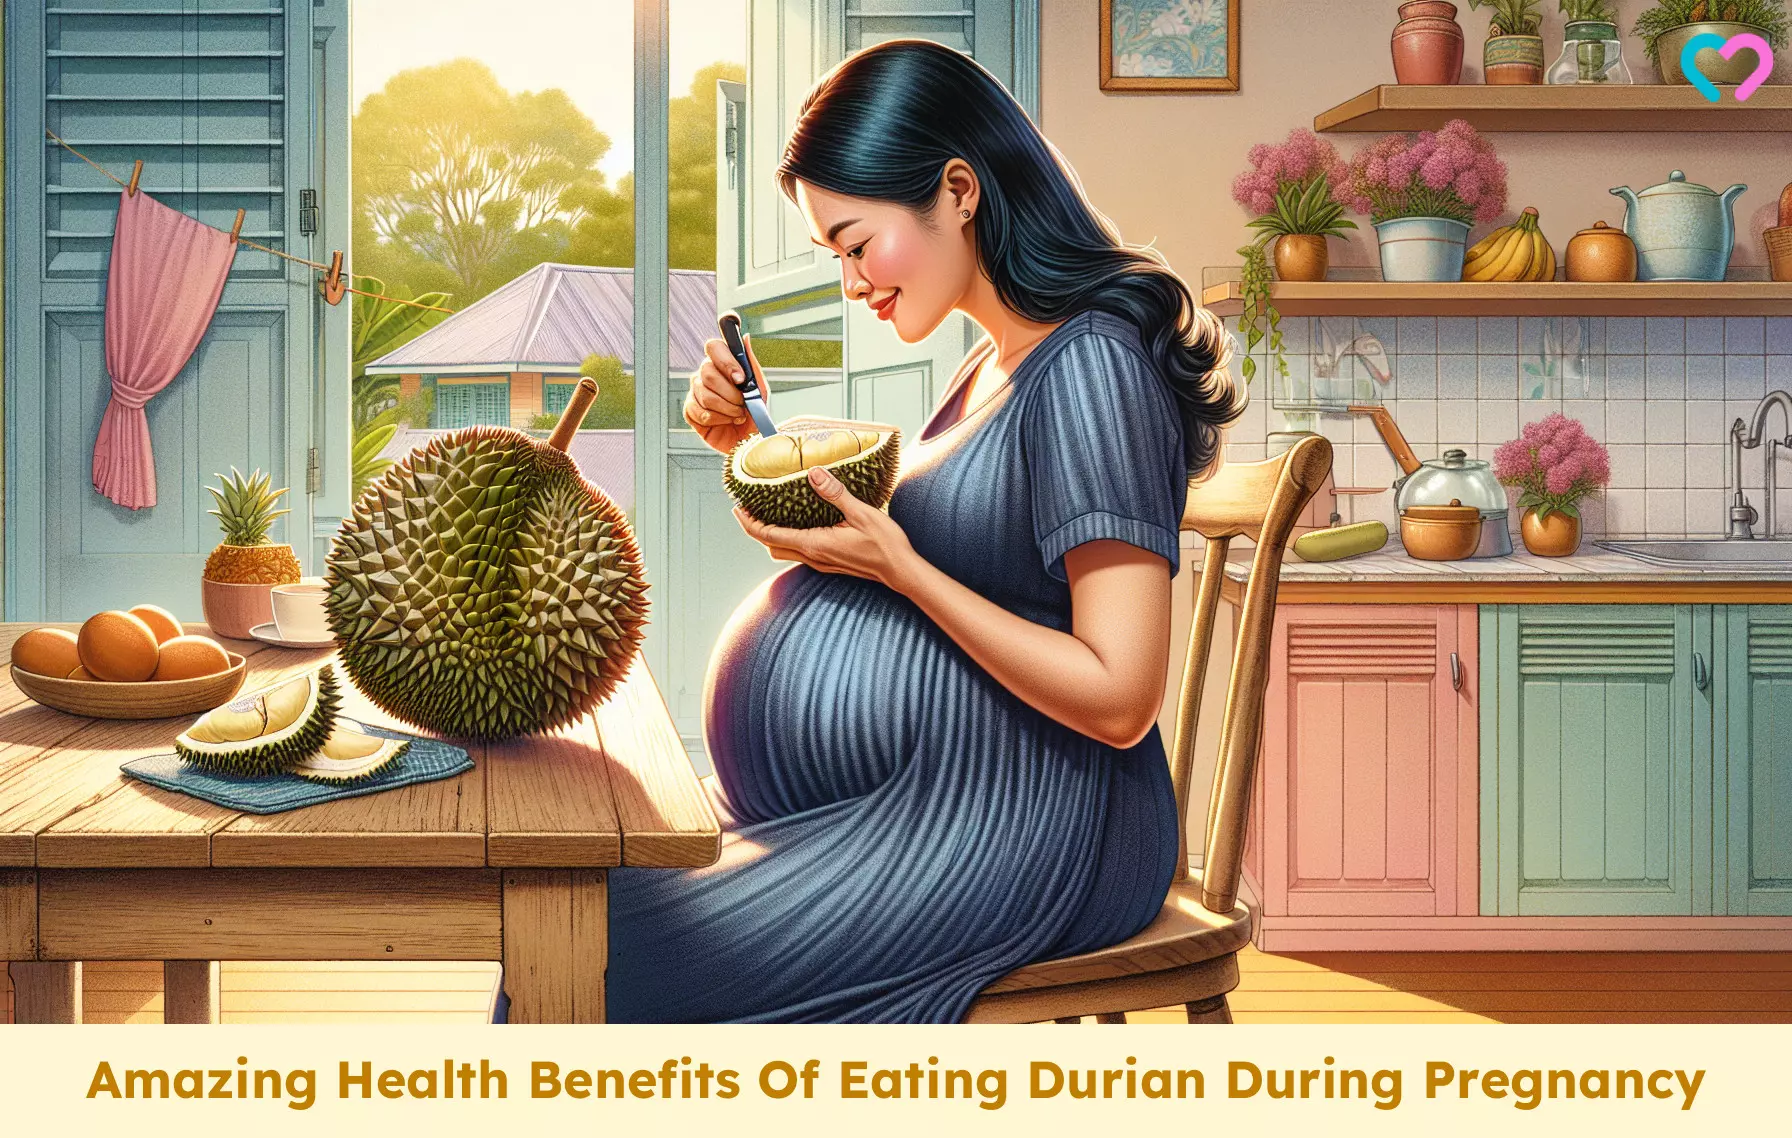 Durian During Pregnancy_illustration